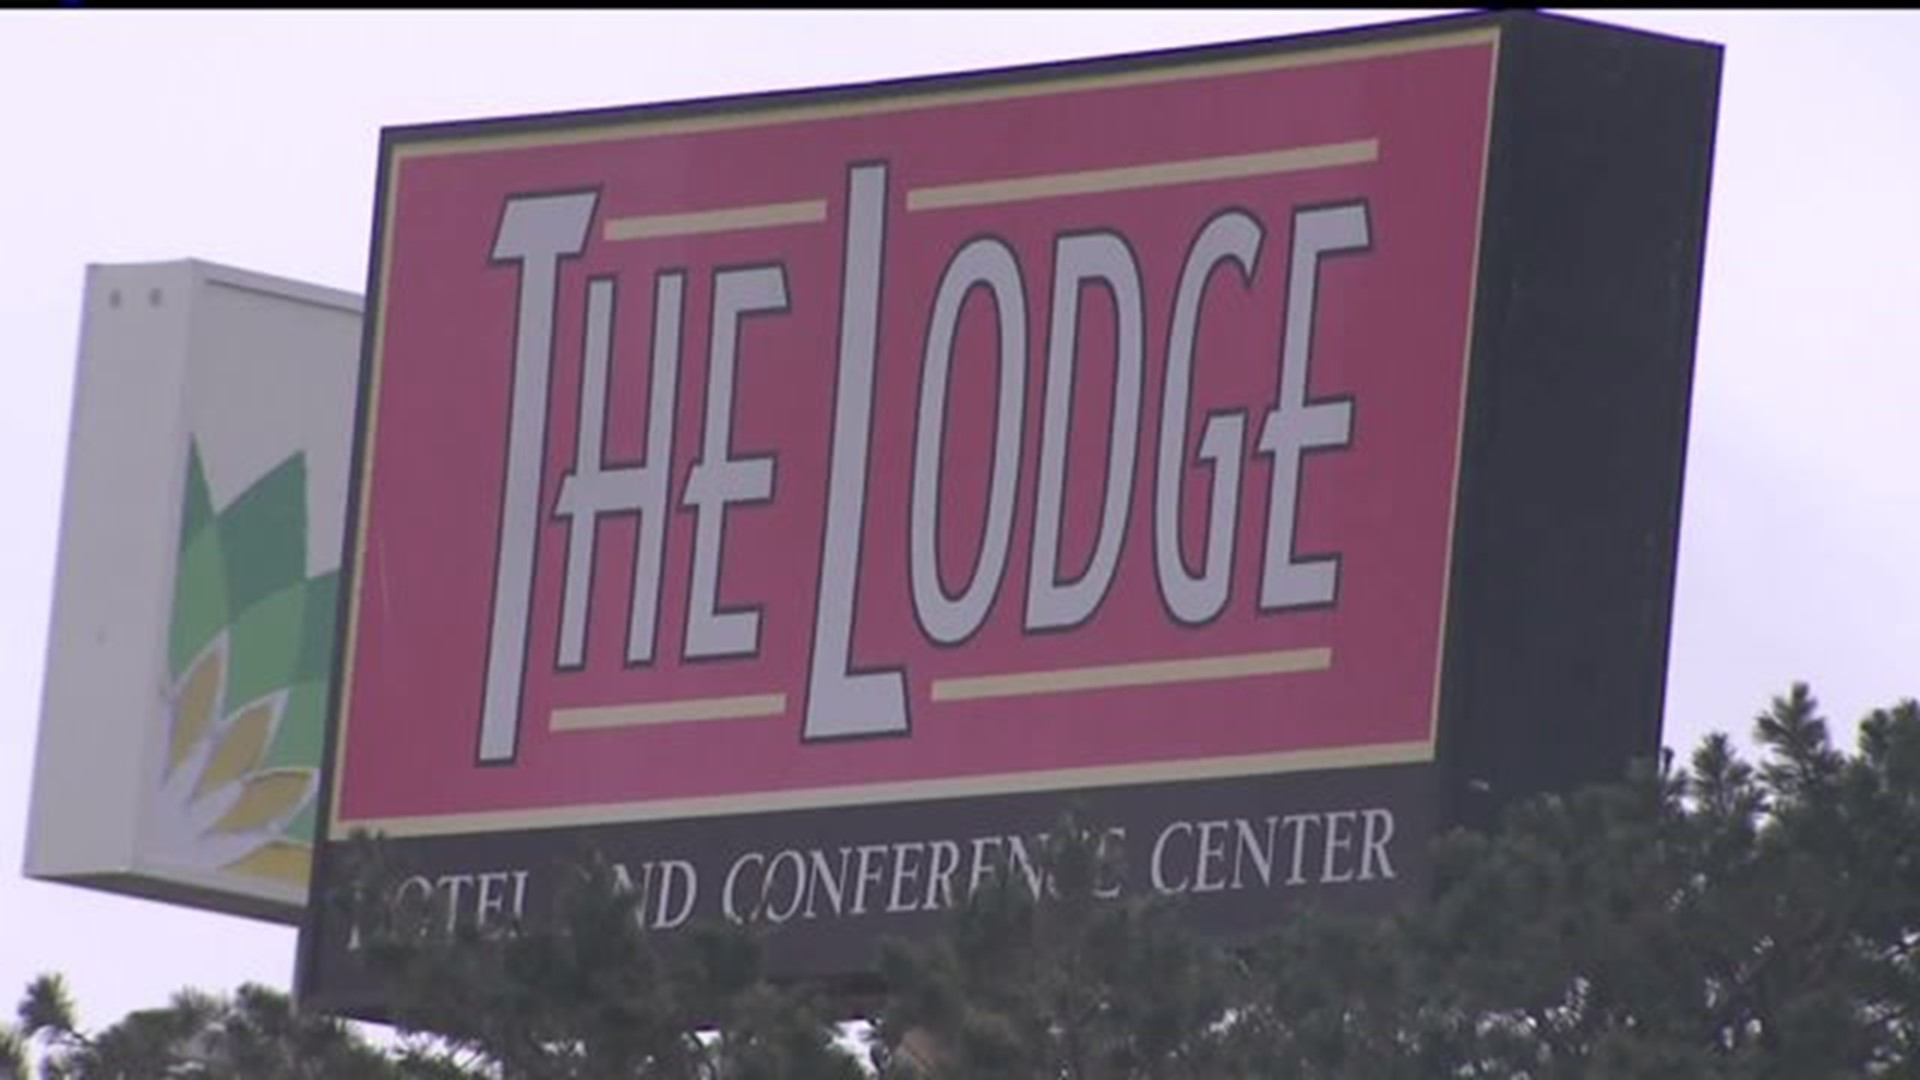 Lodge Hotel liquidation sale